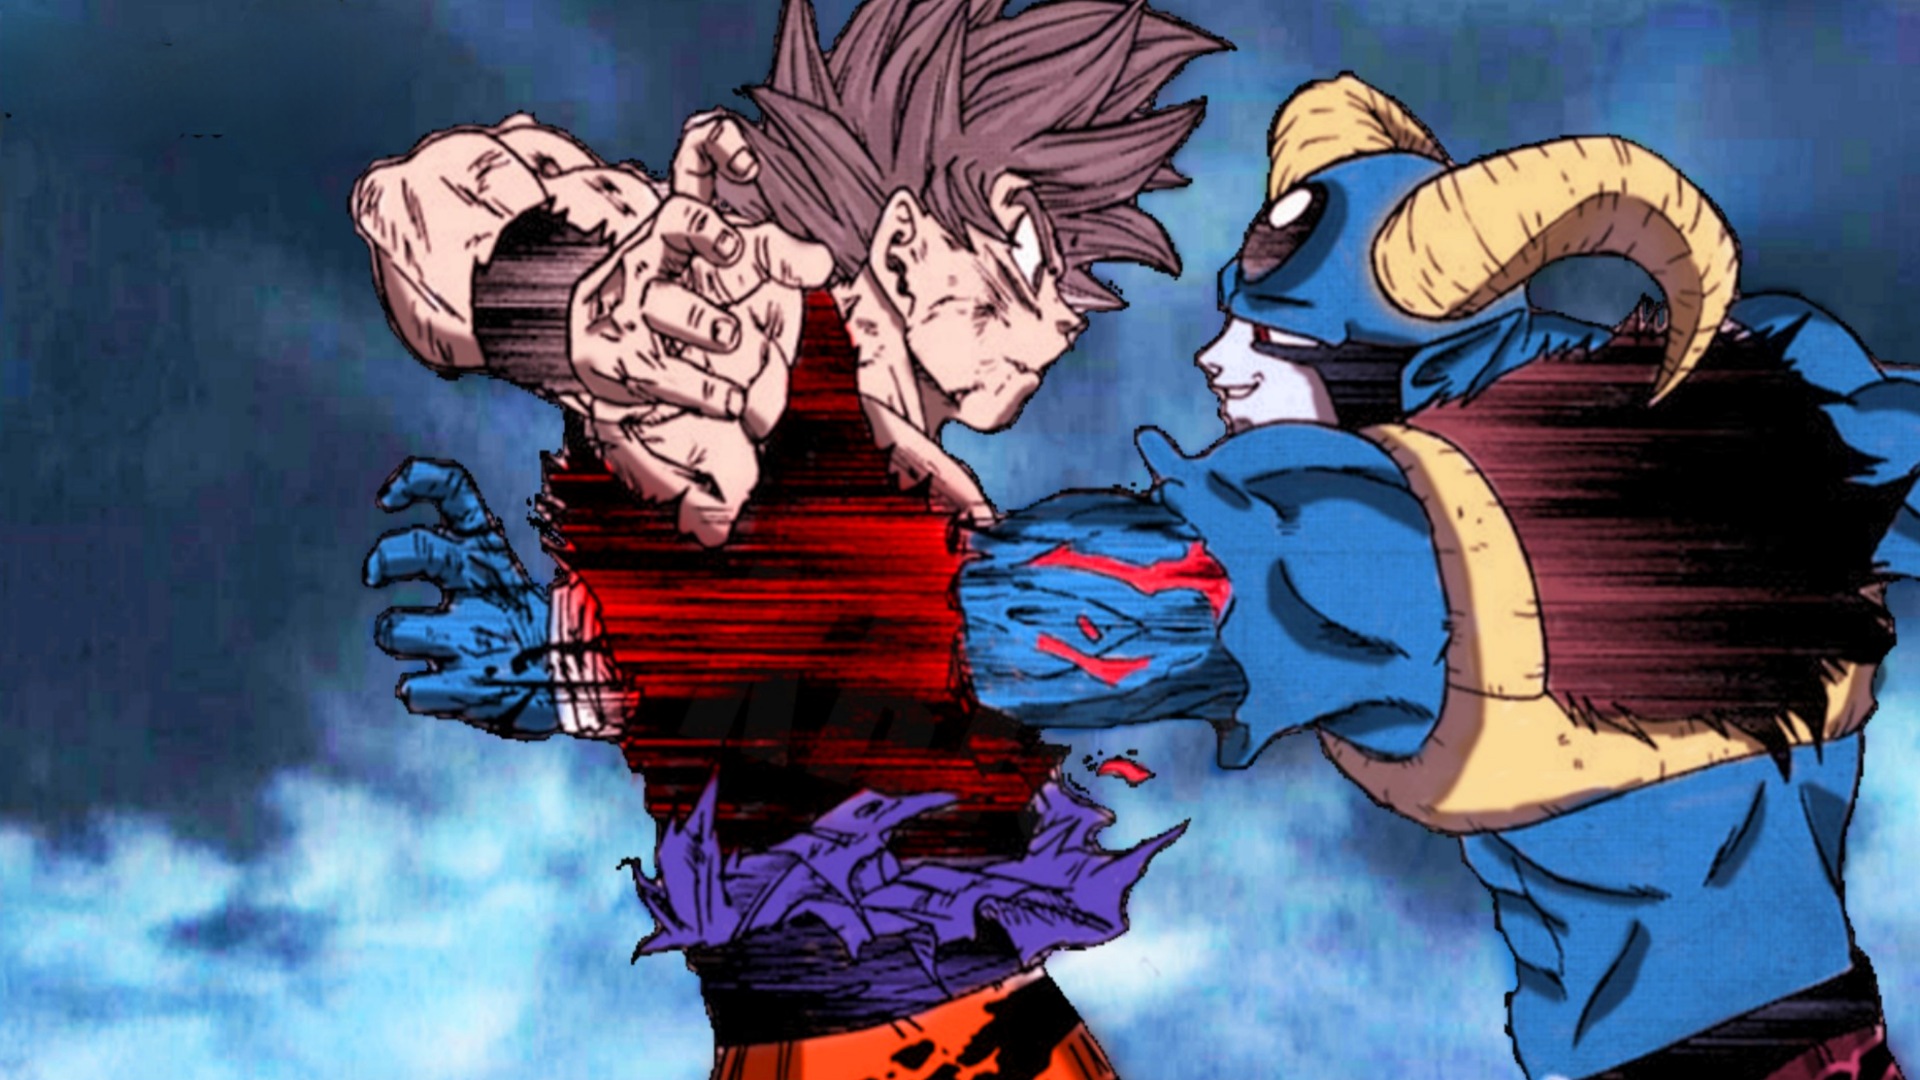 Ultra Instinct Goku vs. Moro: Who Would Win in a Fight?